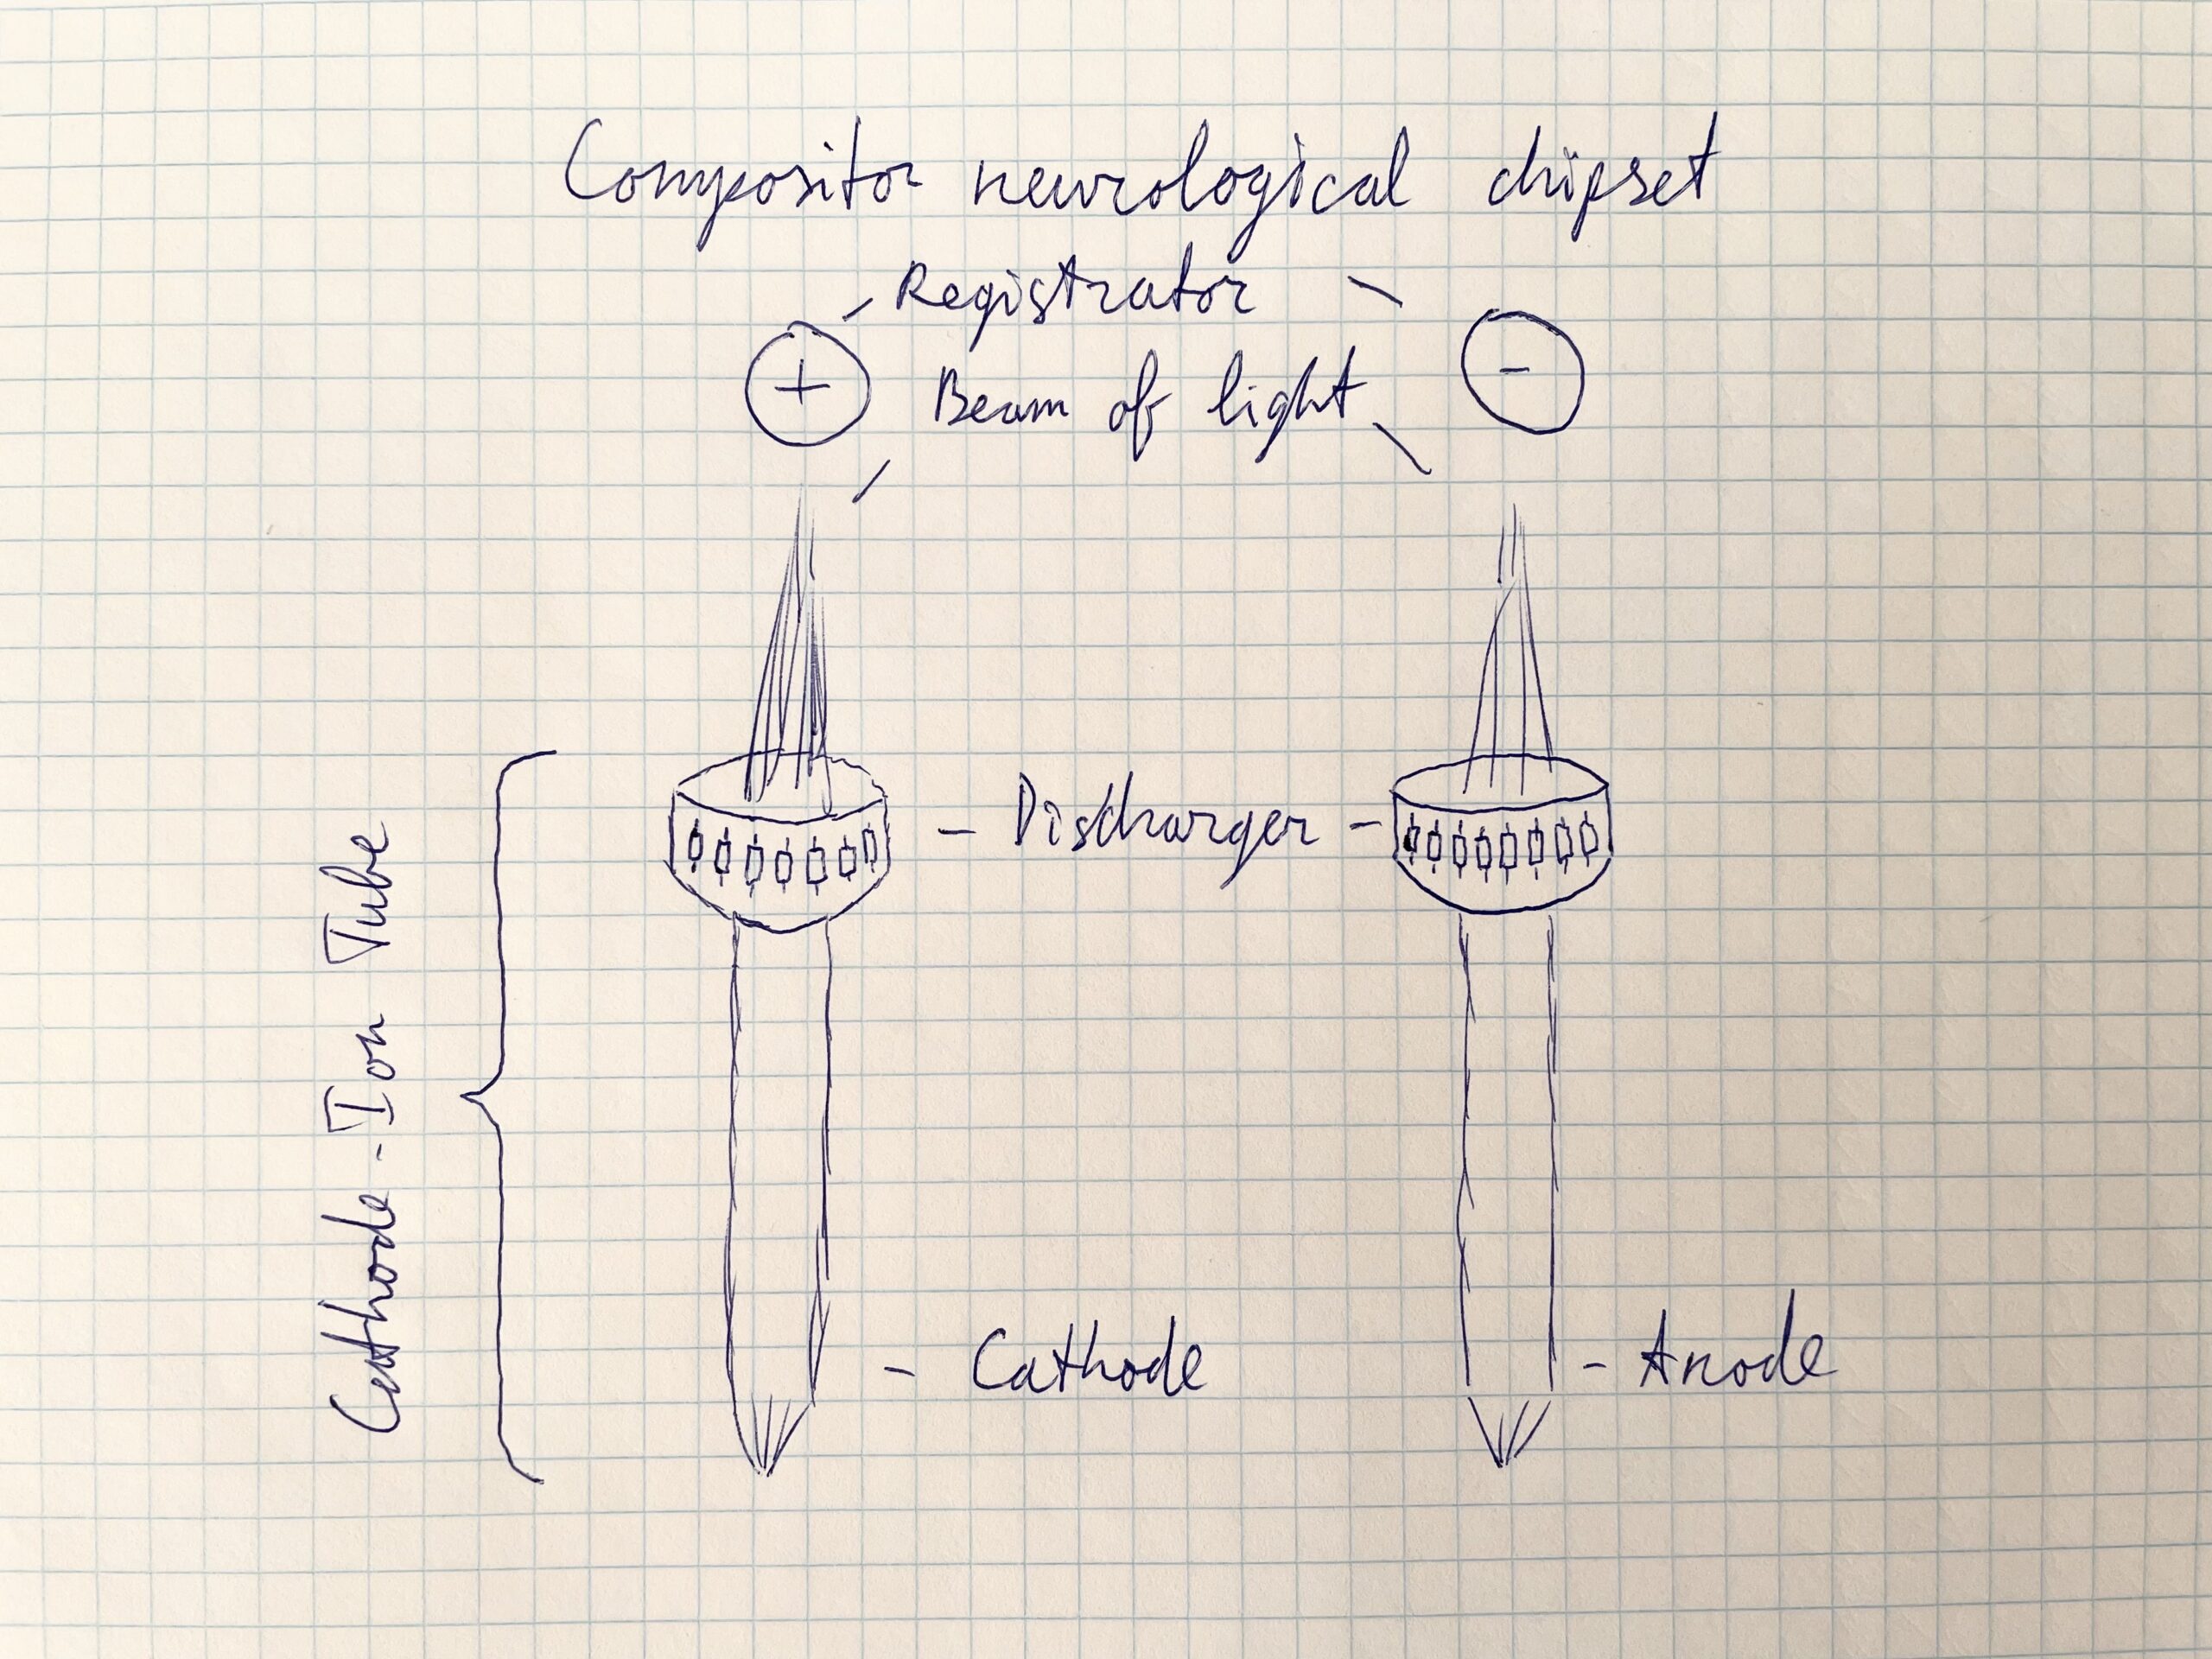 Схема зарисовки неврологического чипсета Compositor